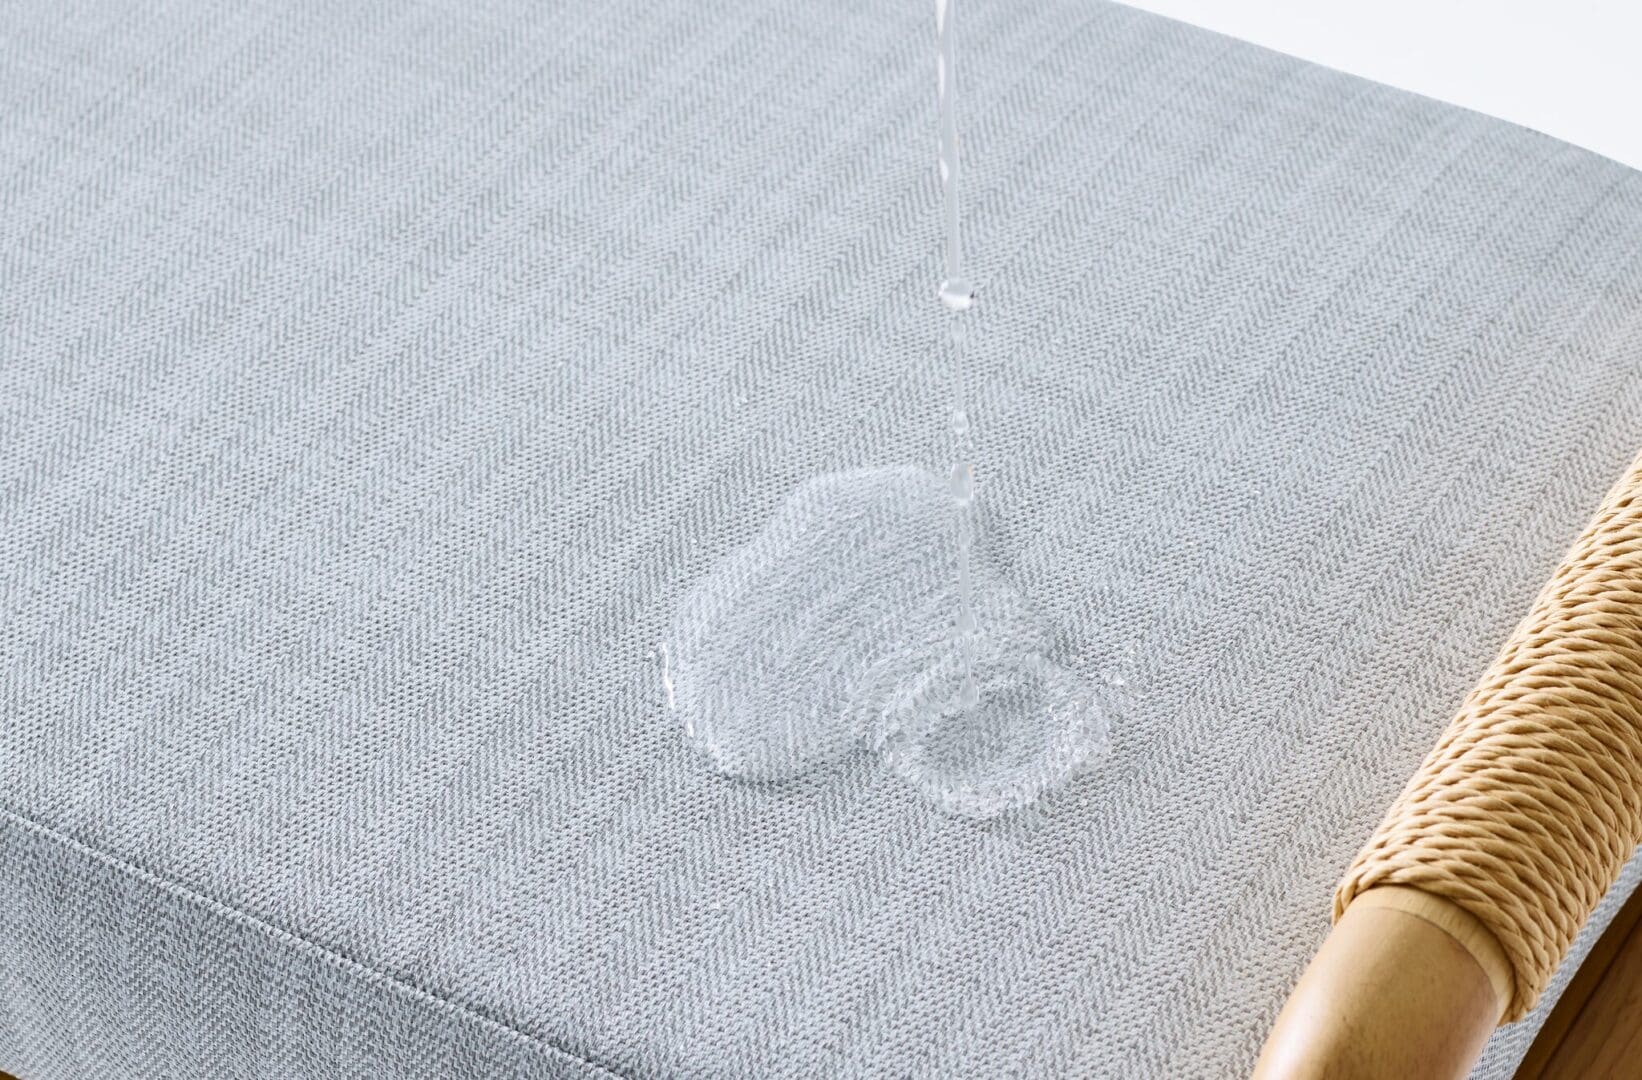 A water drop falling on top of a mattress.